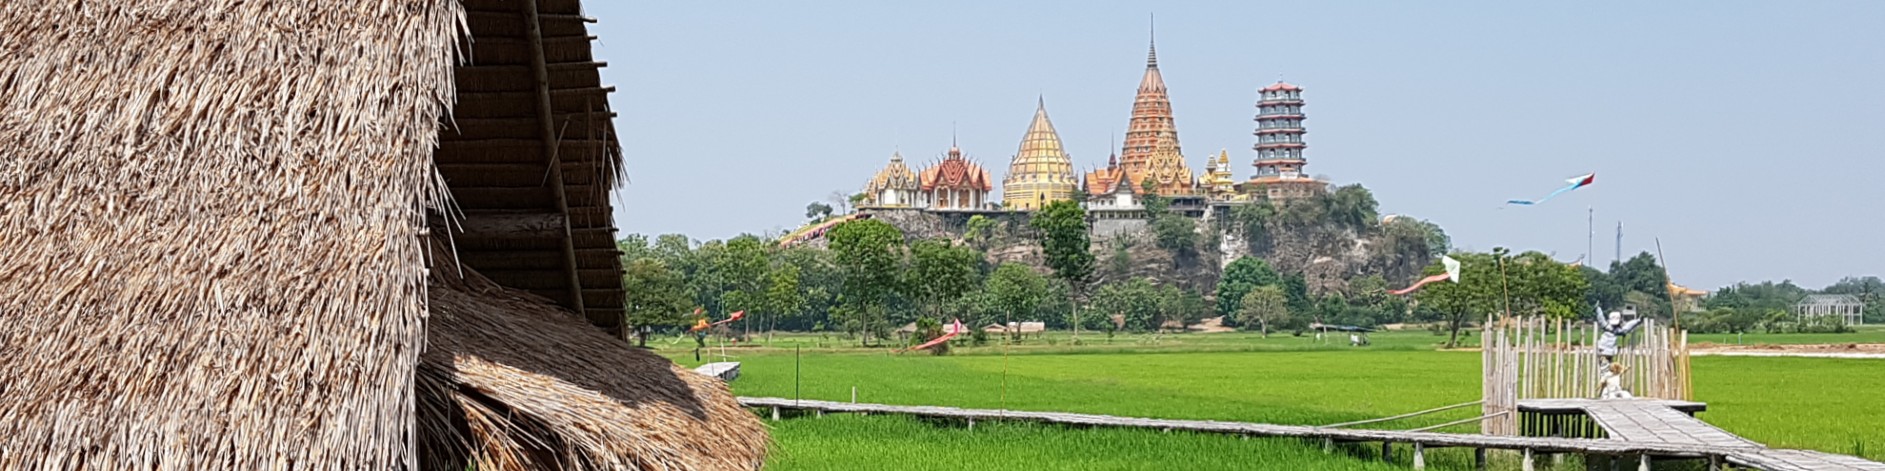 Wat Tham Suea (Tiger Temple), Tha Muang District, Kanchanaburi Province